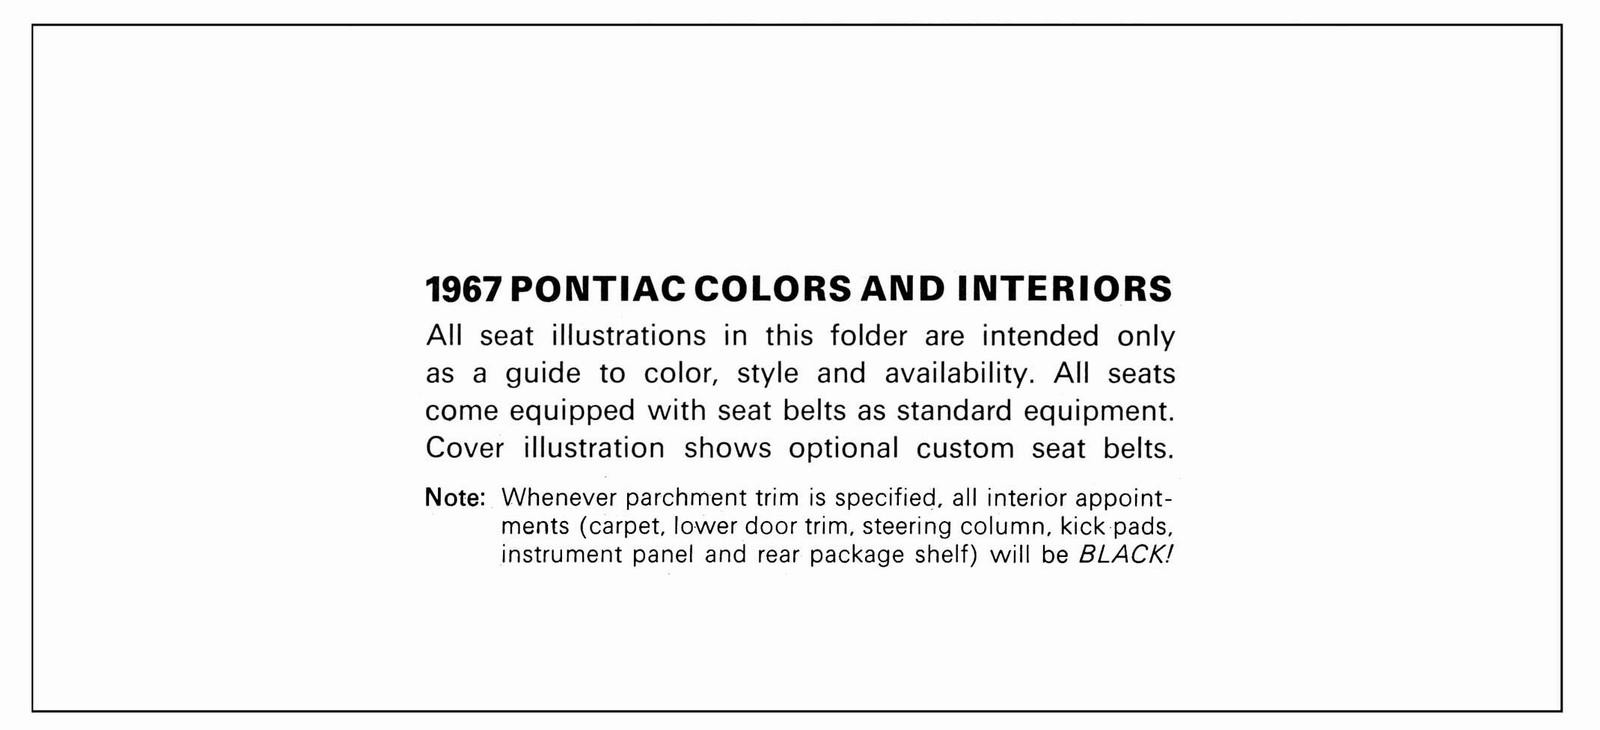 n_1967 Pontiac Colors and Interiors-02.jpg